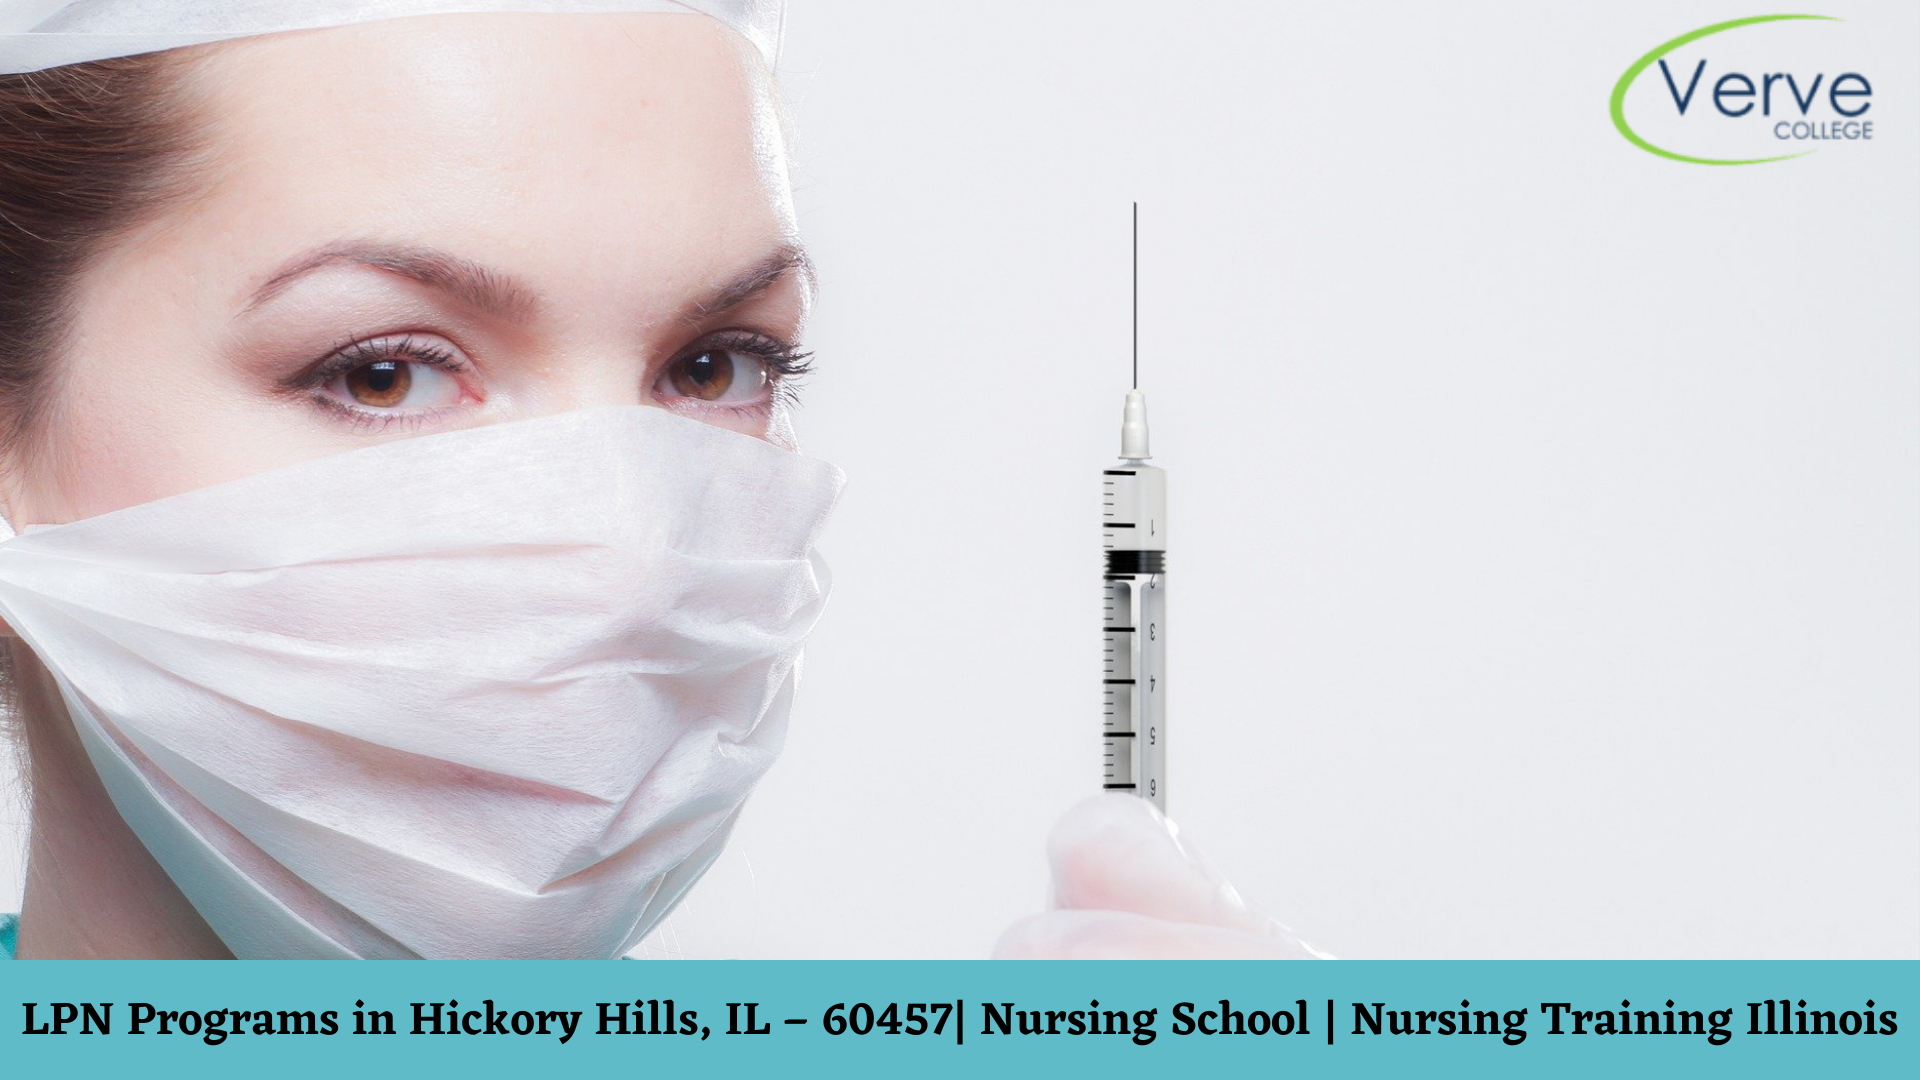 LPN Programs in Hickory Hills, IL – 60457| Nursing School | Nursing Training Illinois